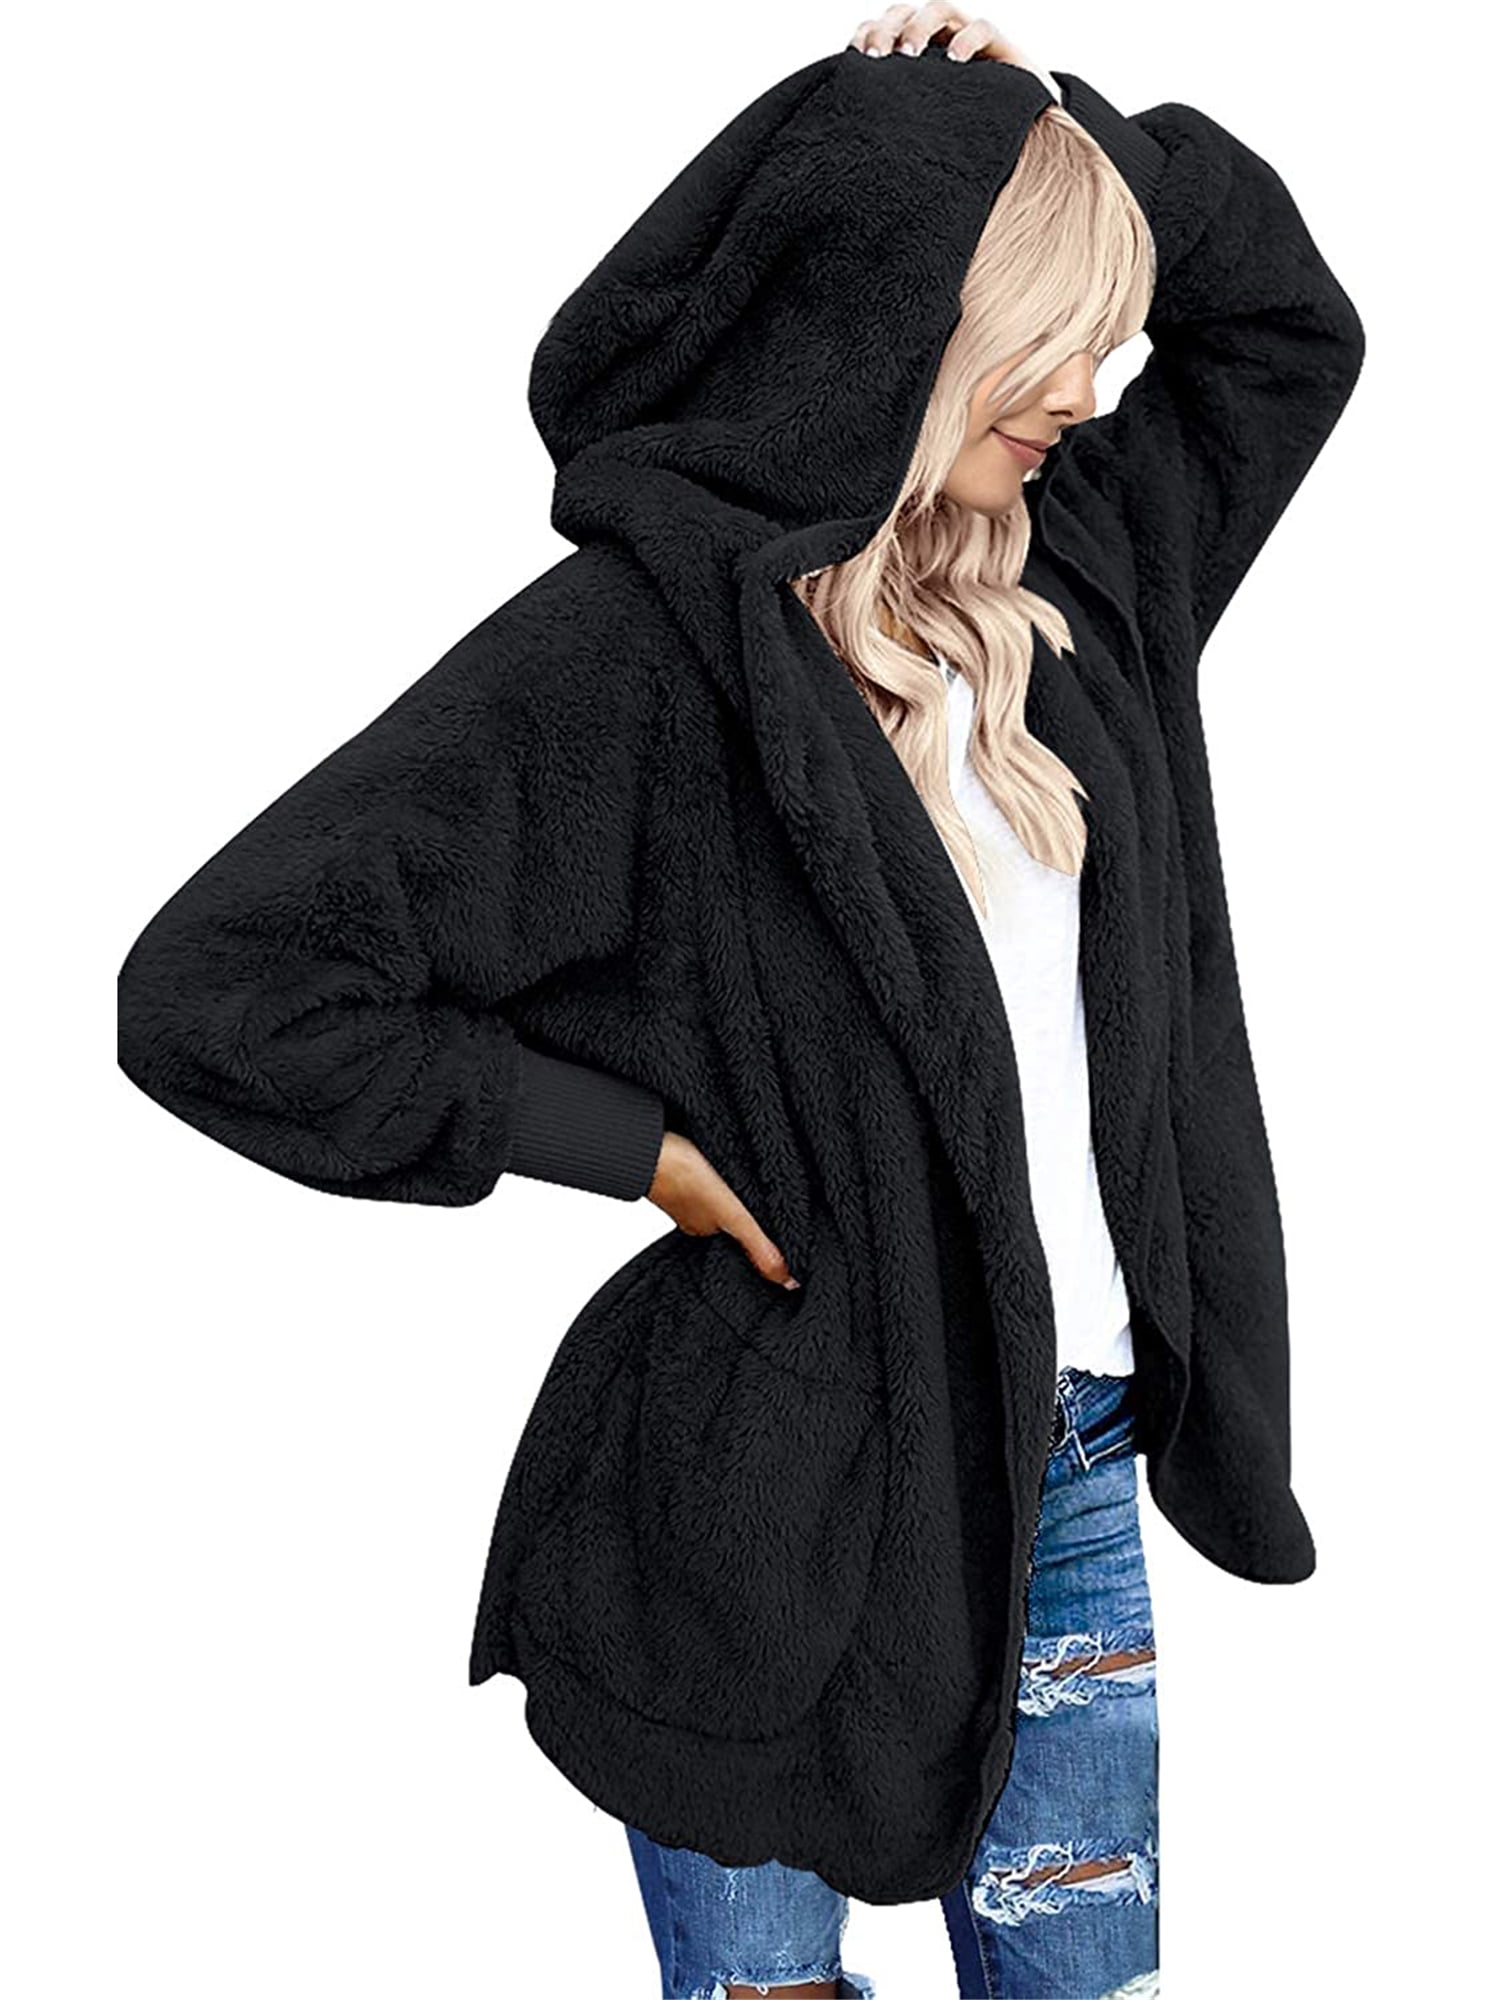 Oyamiki Womens Warm Double Fuzzy Fleece Hoodies Loose Pullover Hooded Sweatshirt Outwear with Pocket